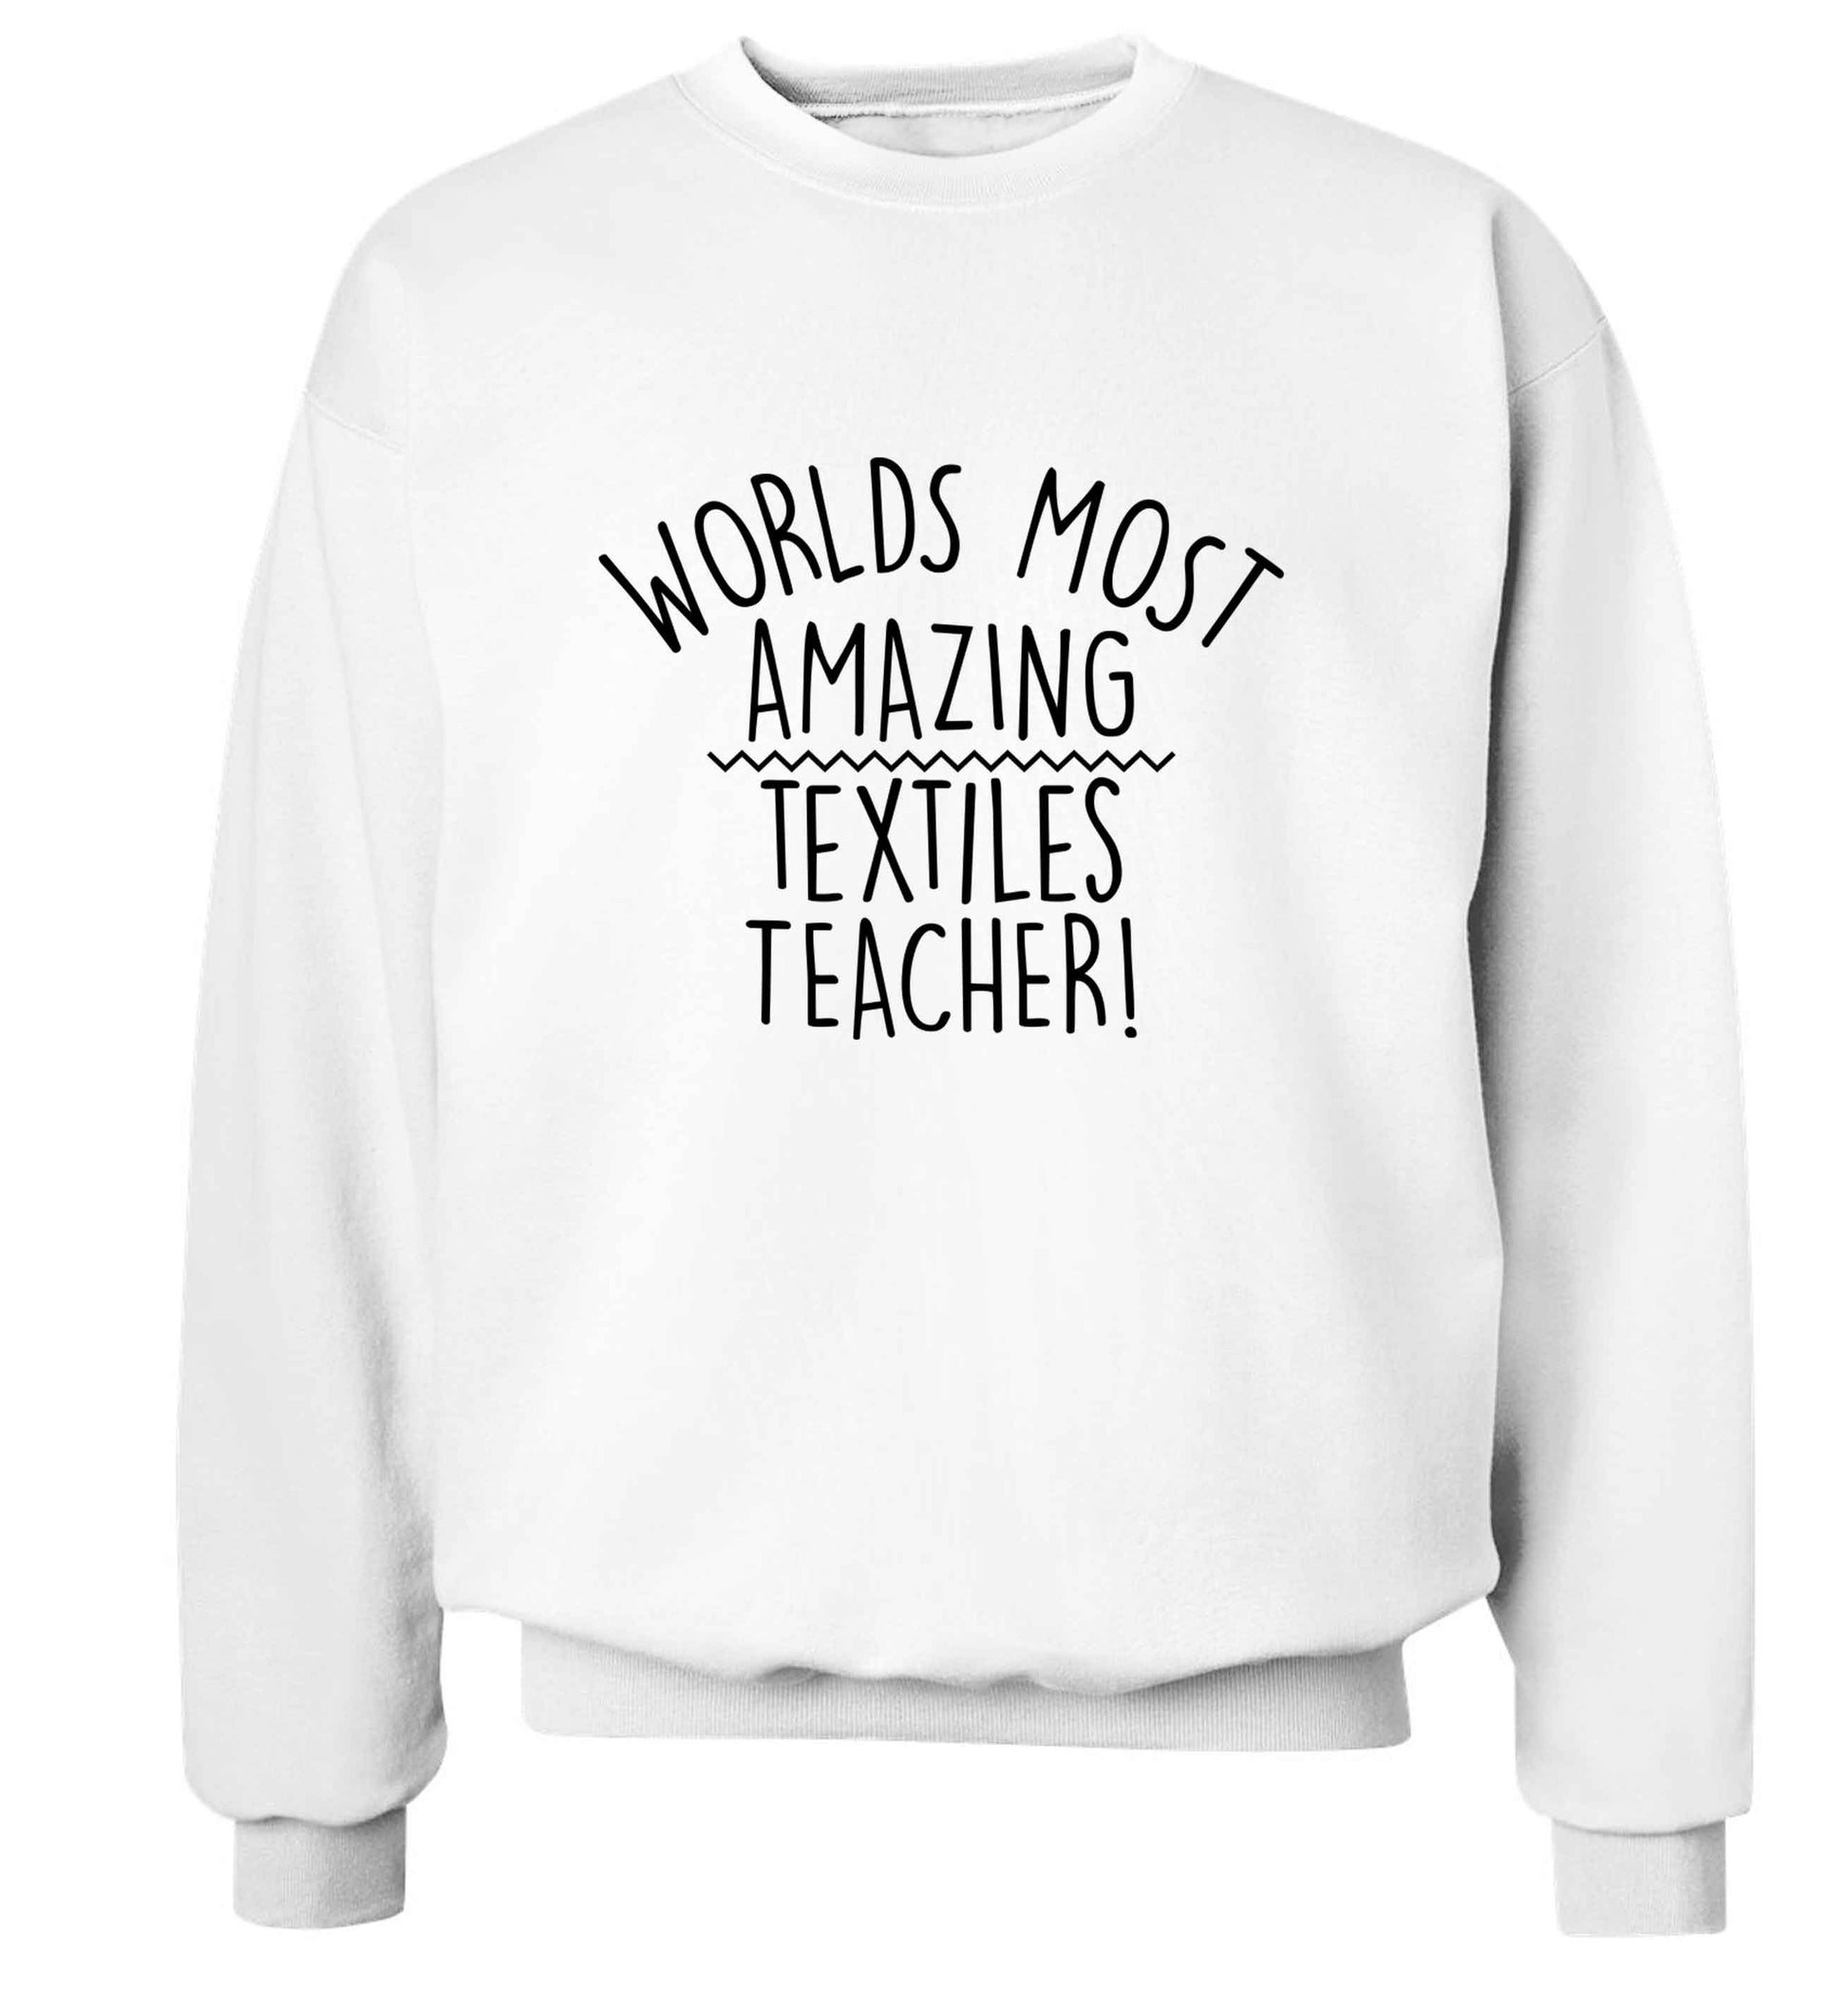 Worlds most amazing textiles teacher adult's unisex white sweater 2XL